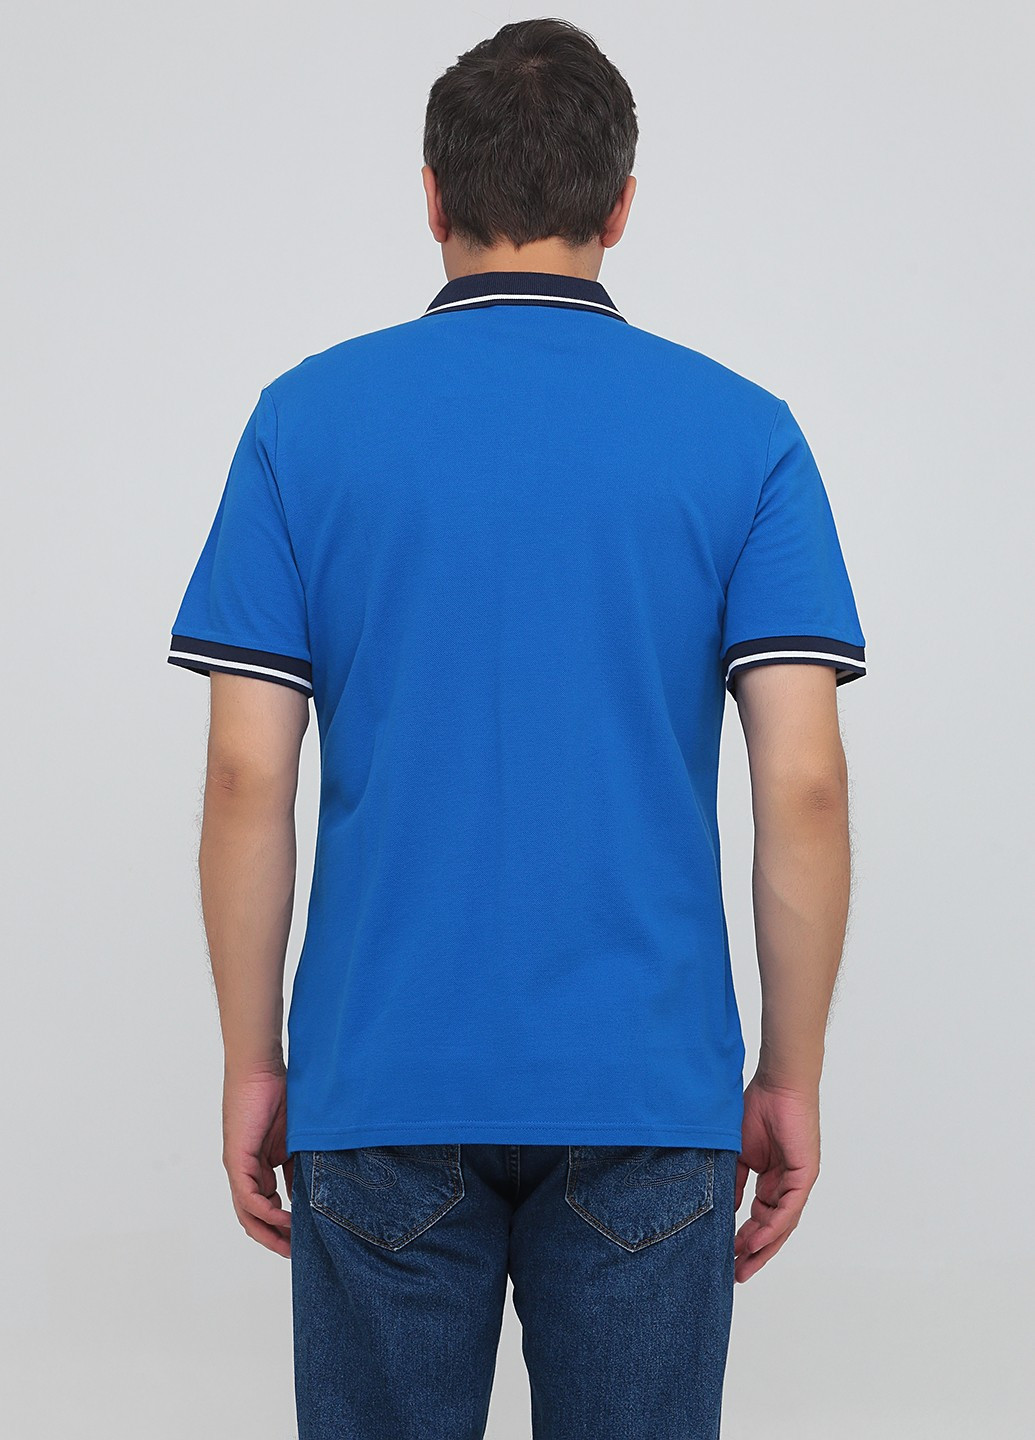 Синяя футболка-поло для мужчин Ellesse однотонная